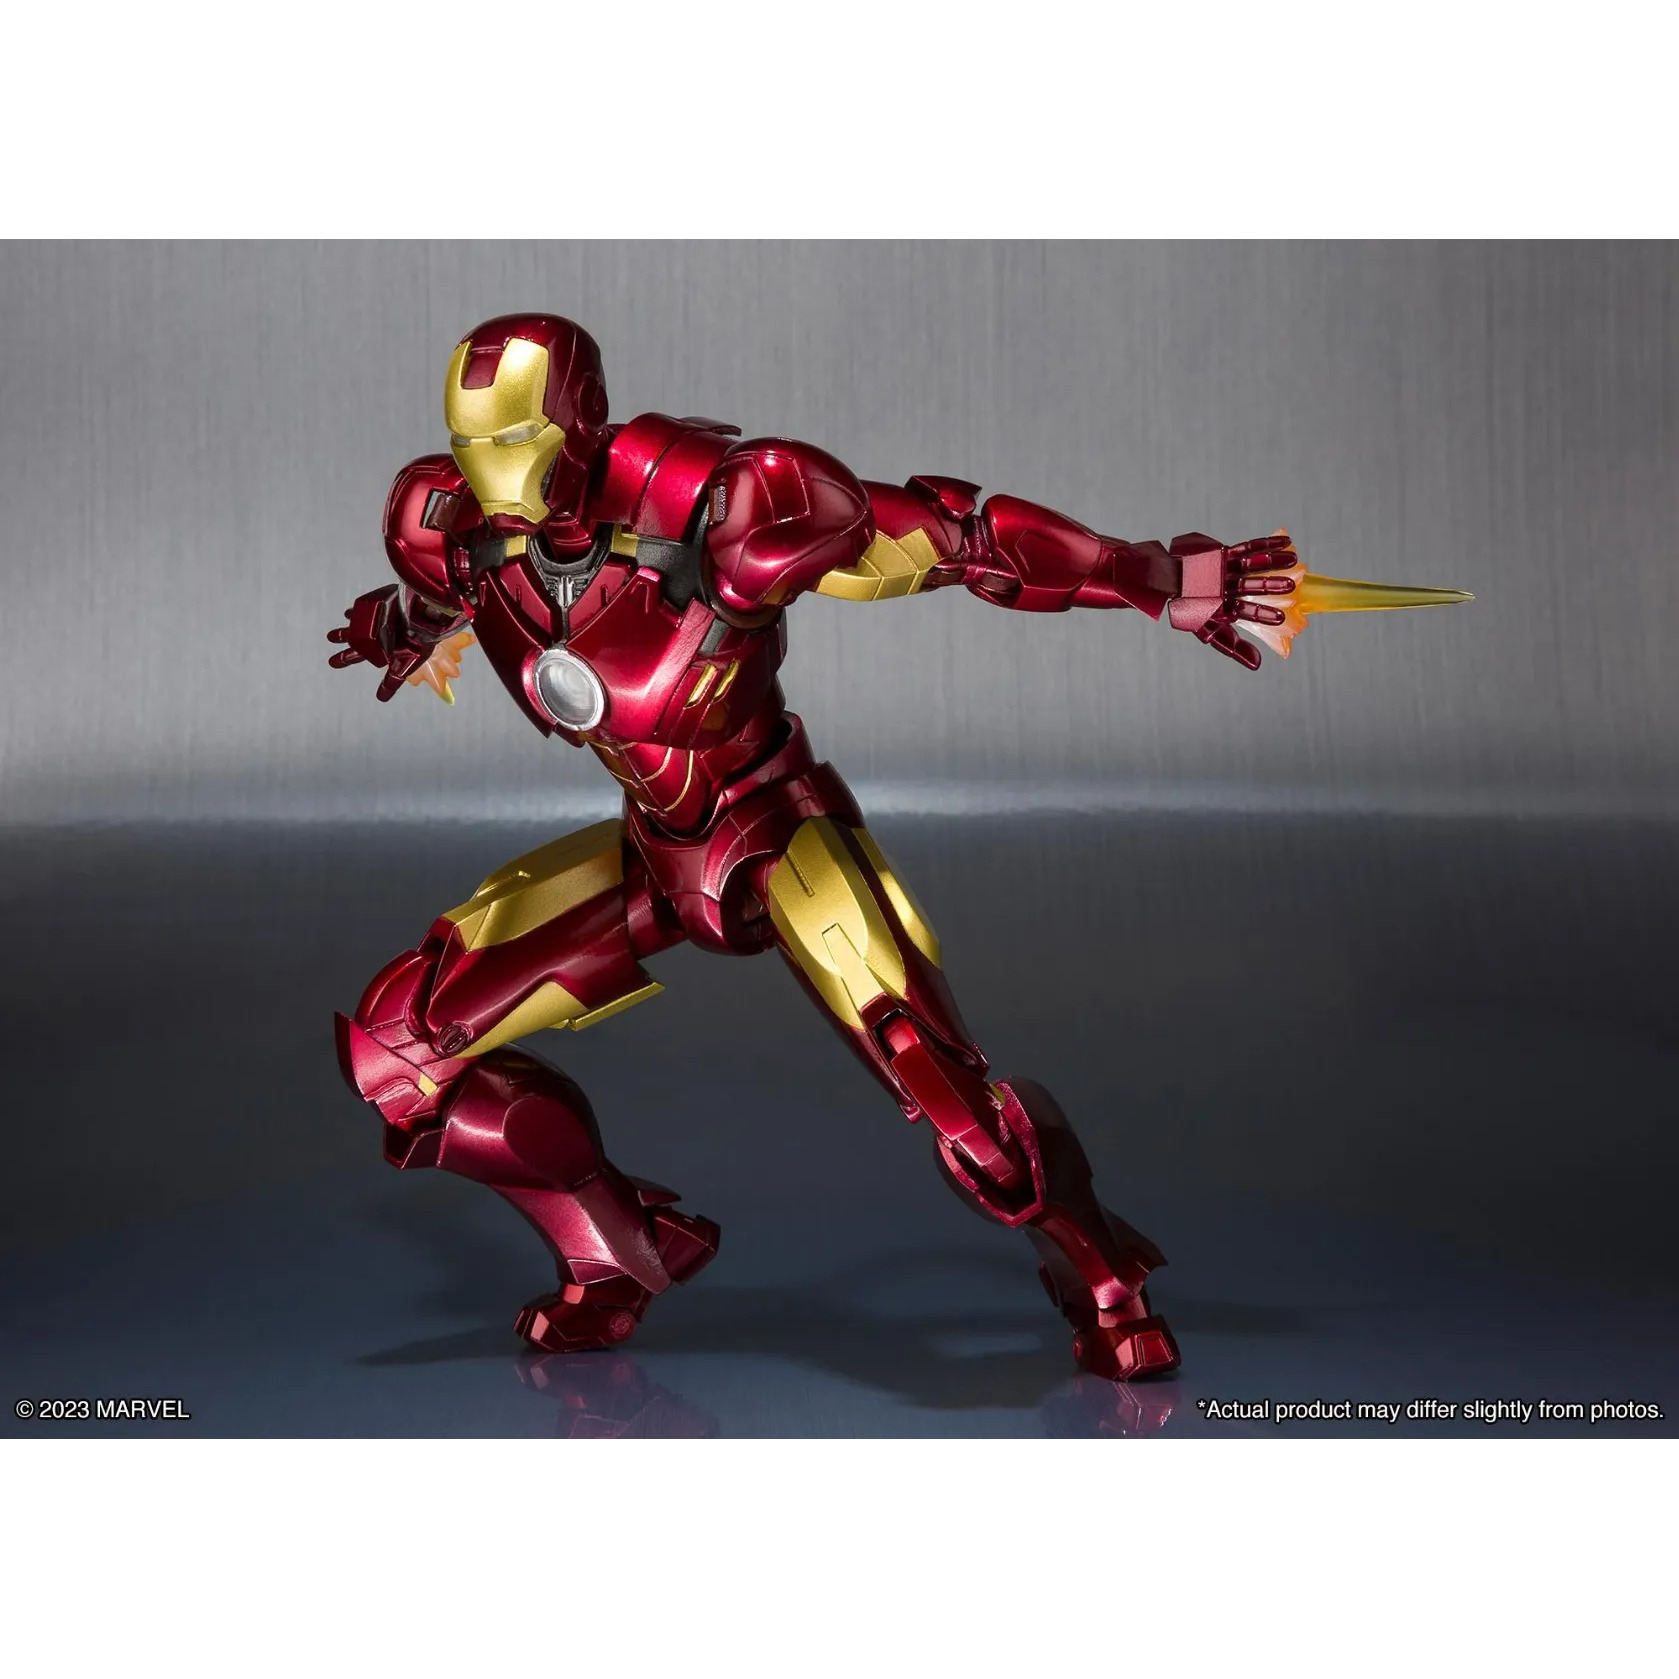 Iron Man Mk-4 Iron Man 2 (15th Anniversary Ver.) S.H.Figuarts Figure (6)